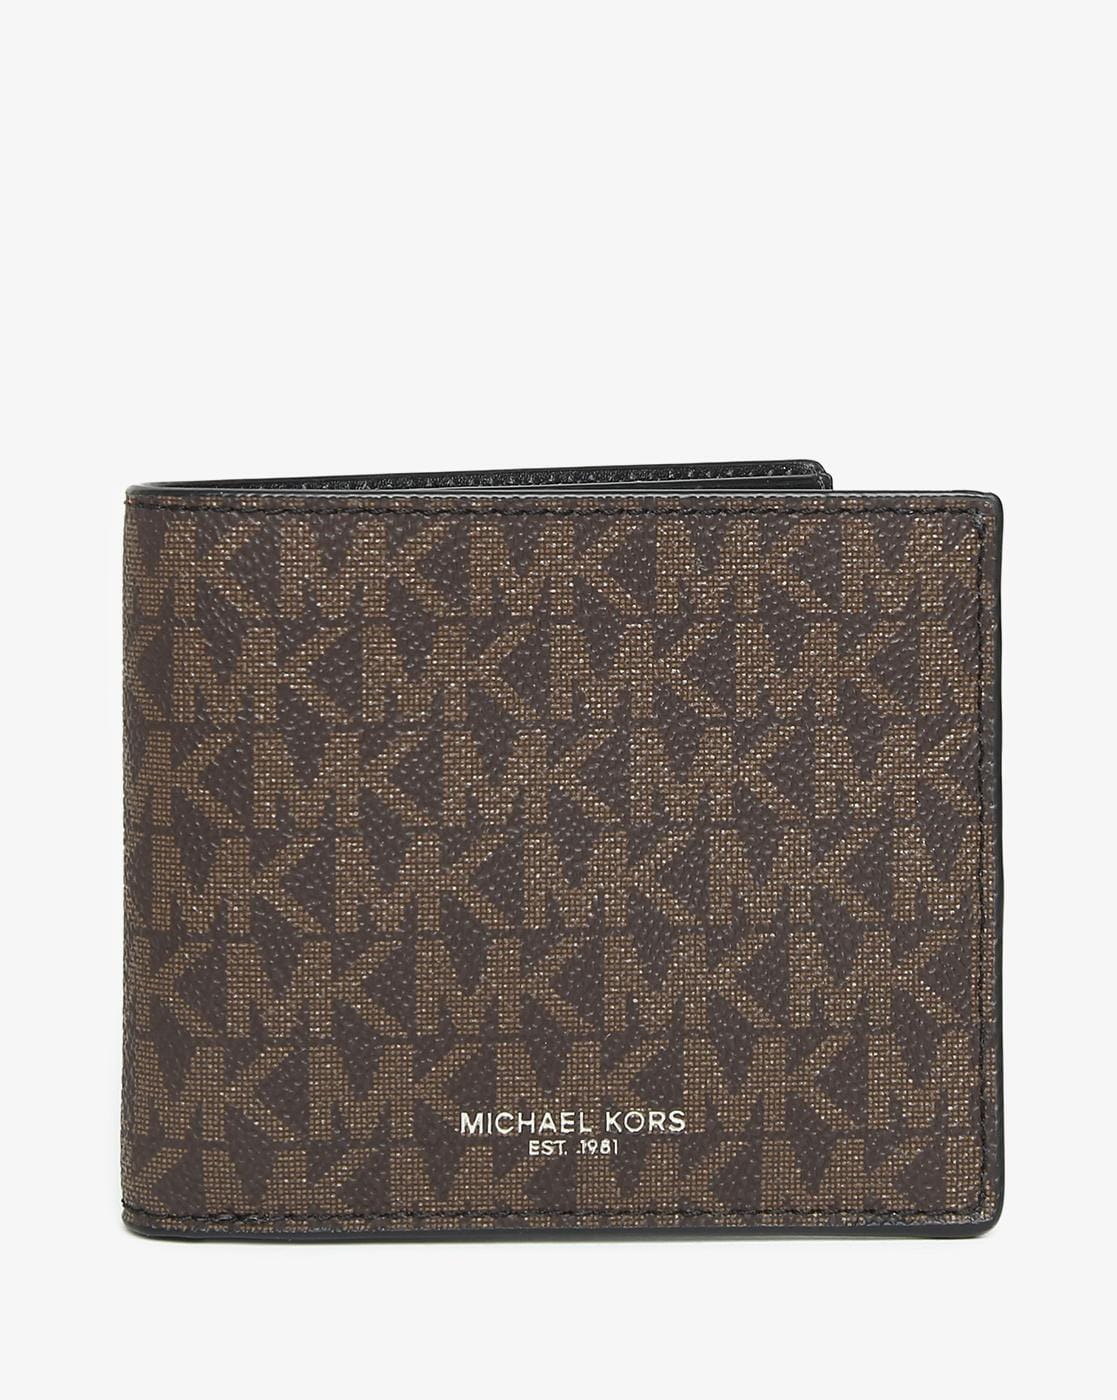 Michael Kors Men’s All Over MK Logo Print Leather Slim Billfold Wallet  Brown NWT